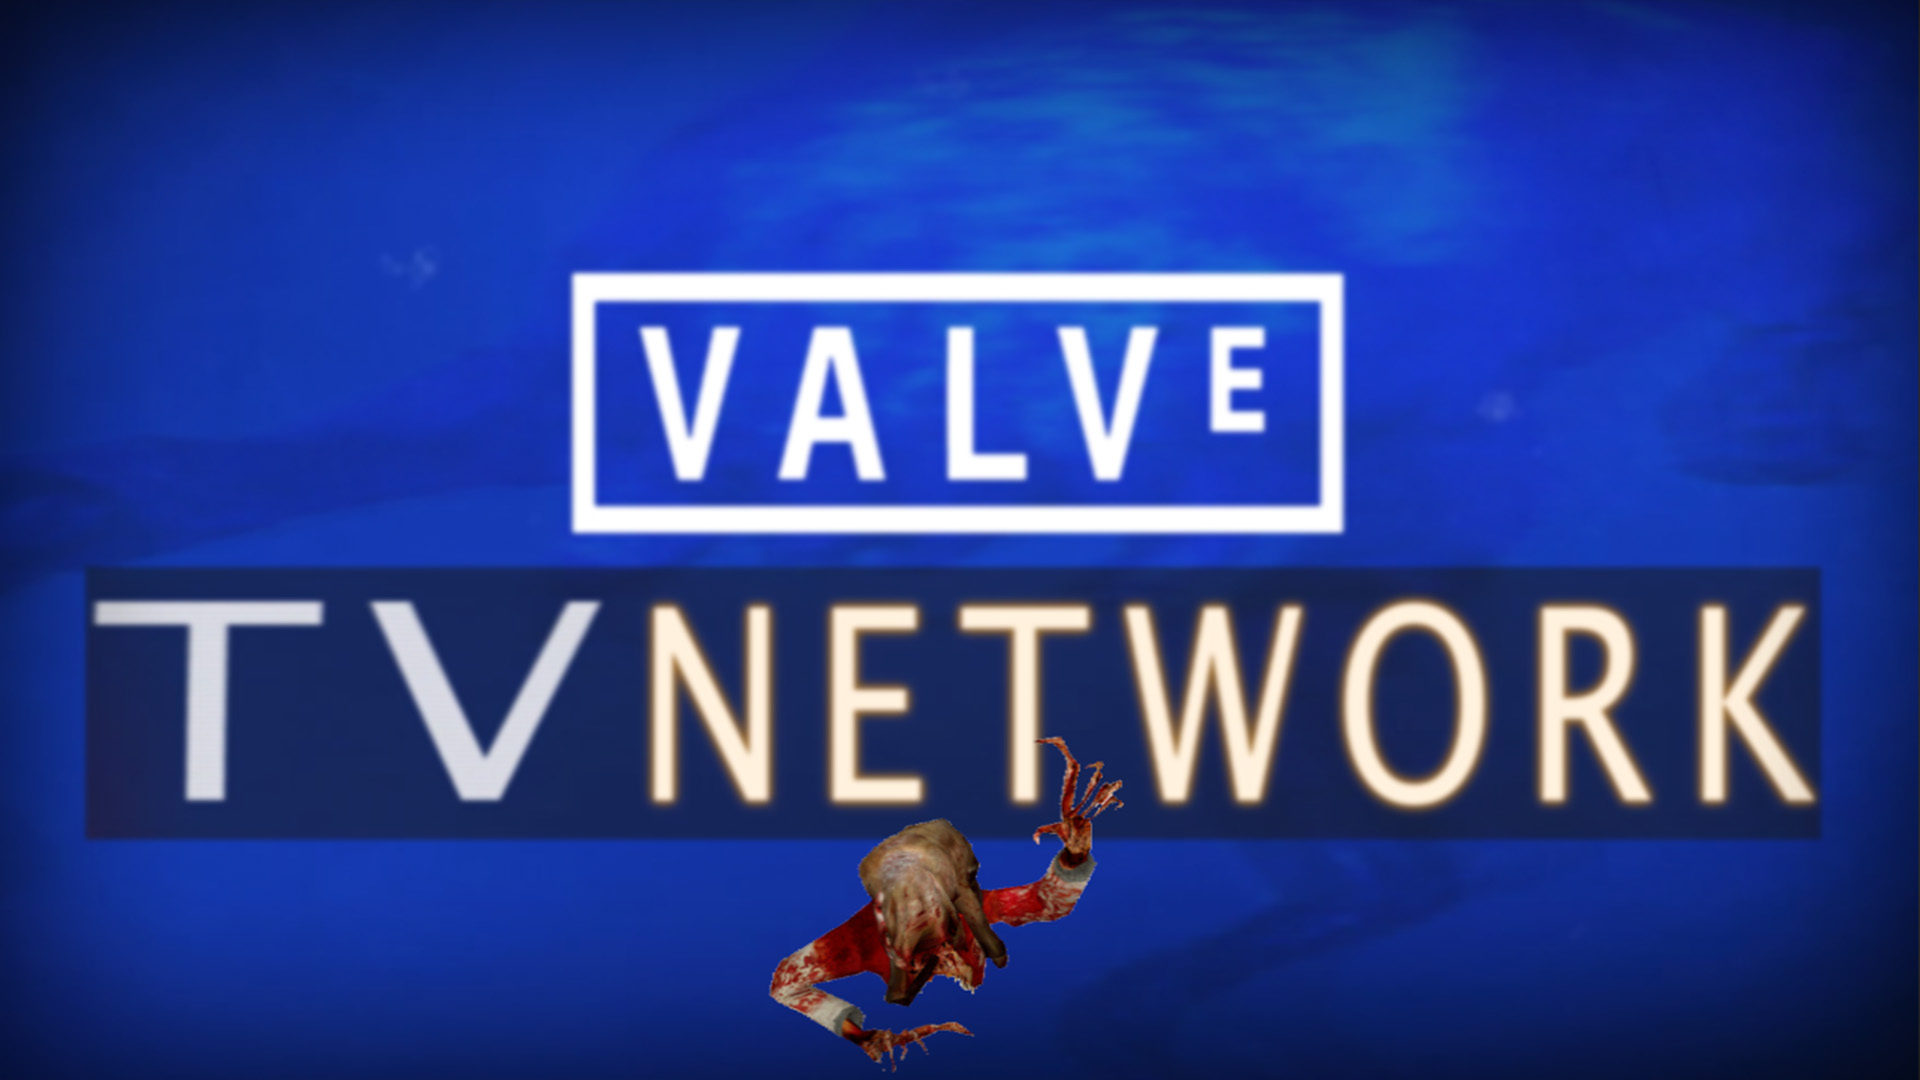 Valve TV Network